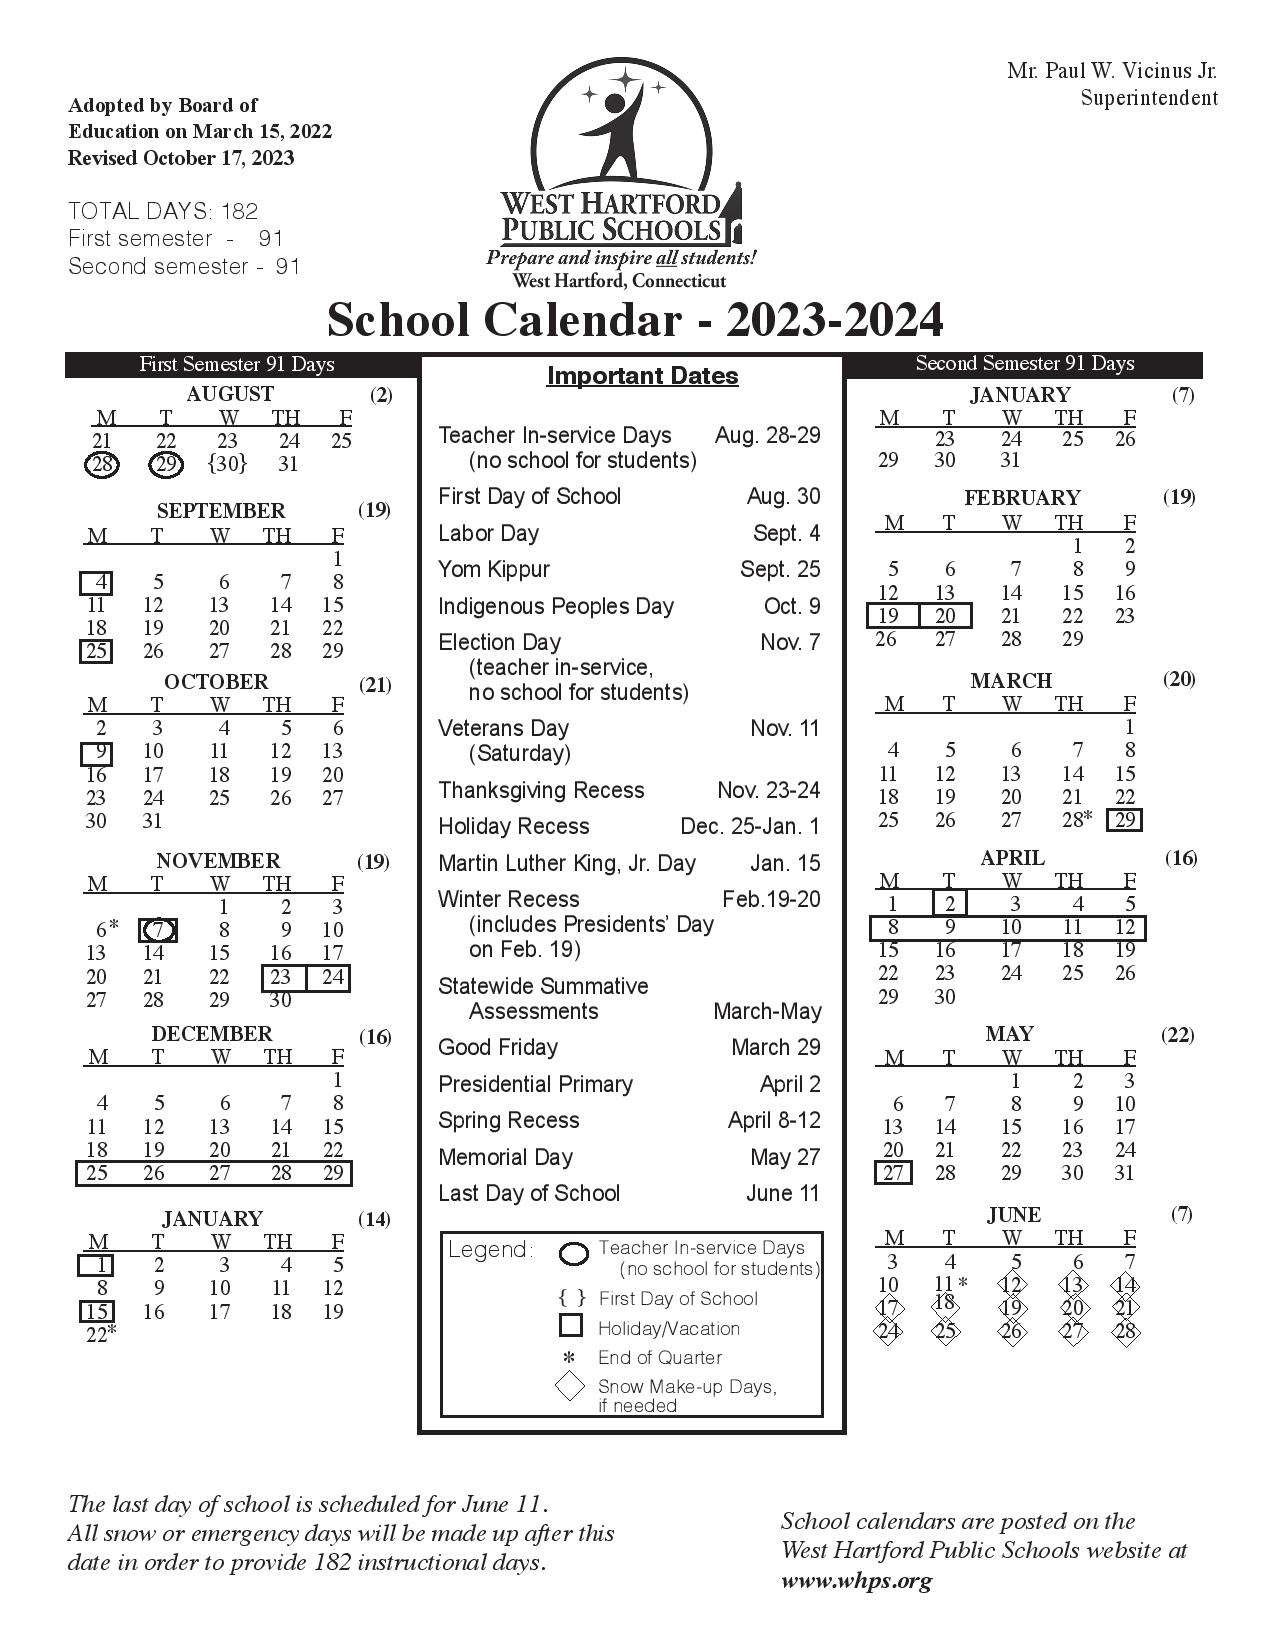 West Hartford Public Schools Calendar 